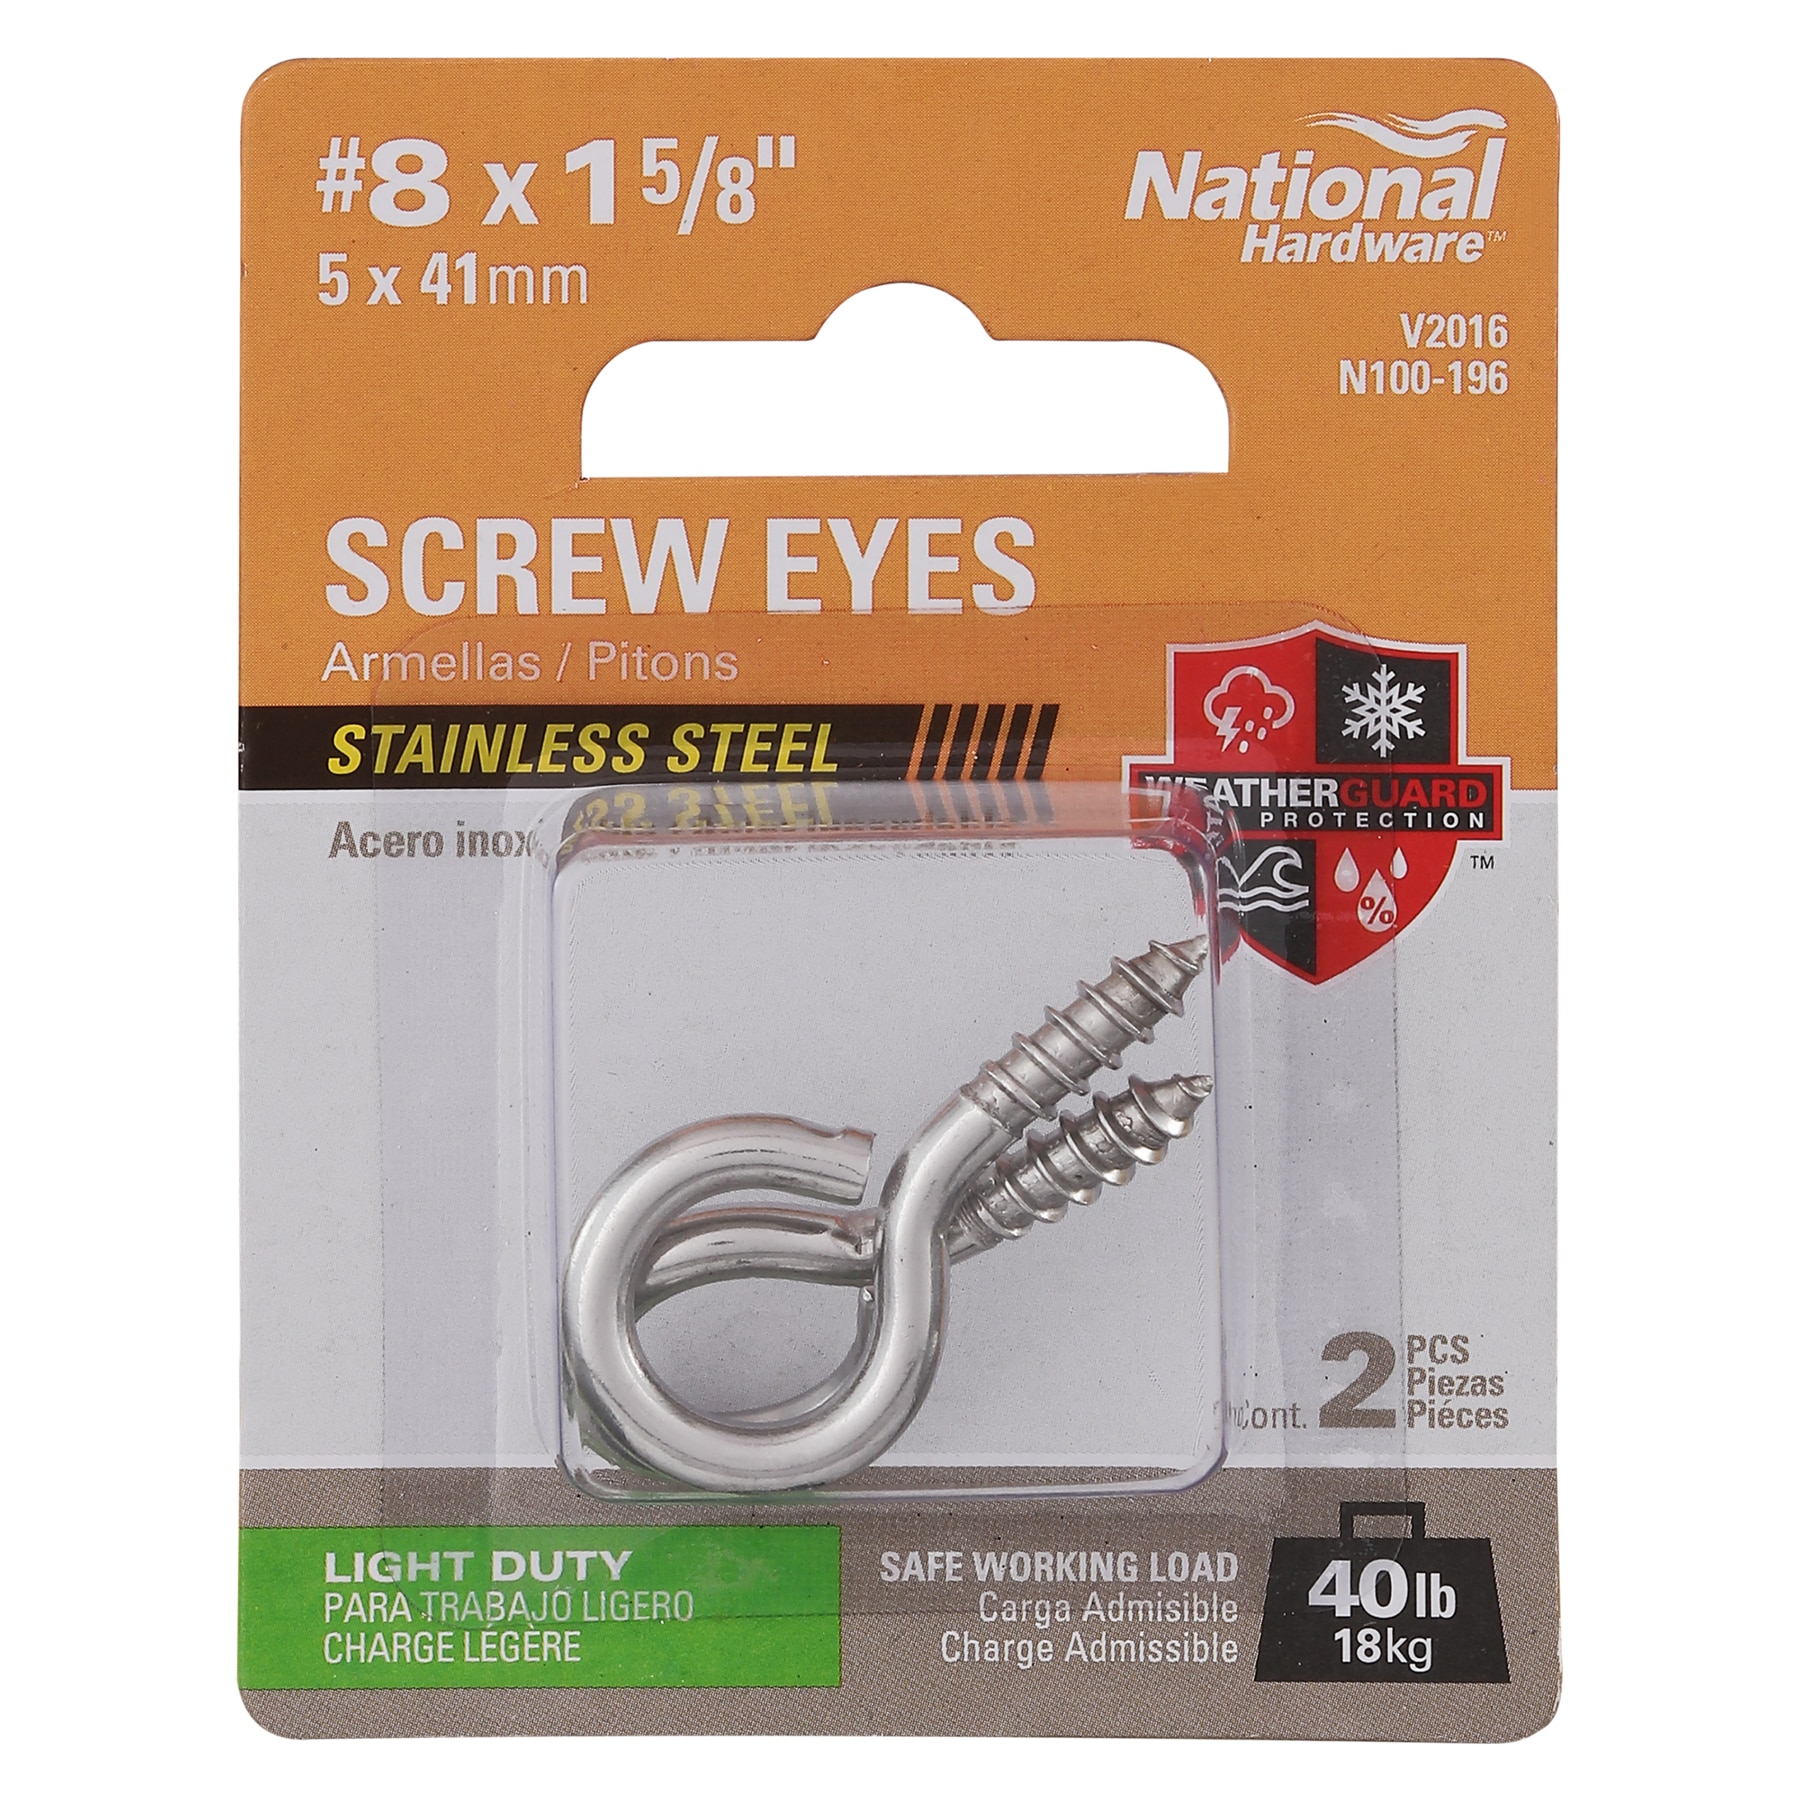 Screw Eyes  National Hardware